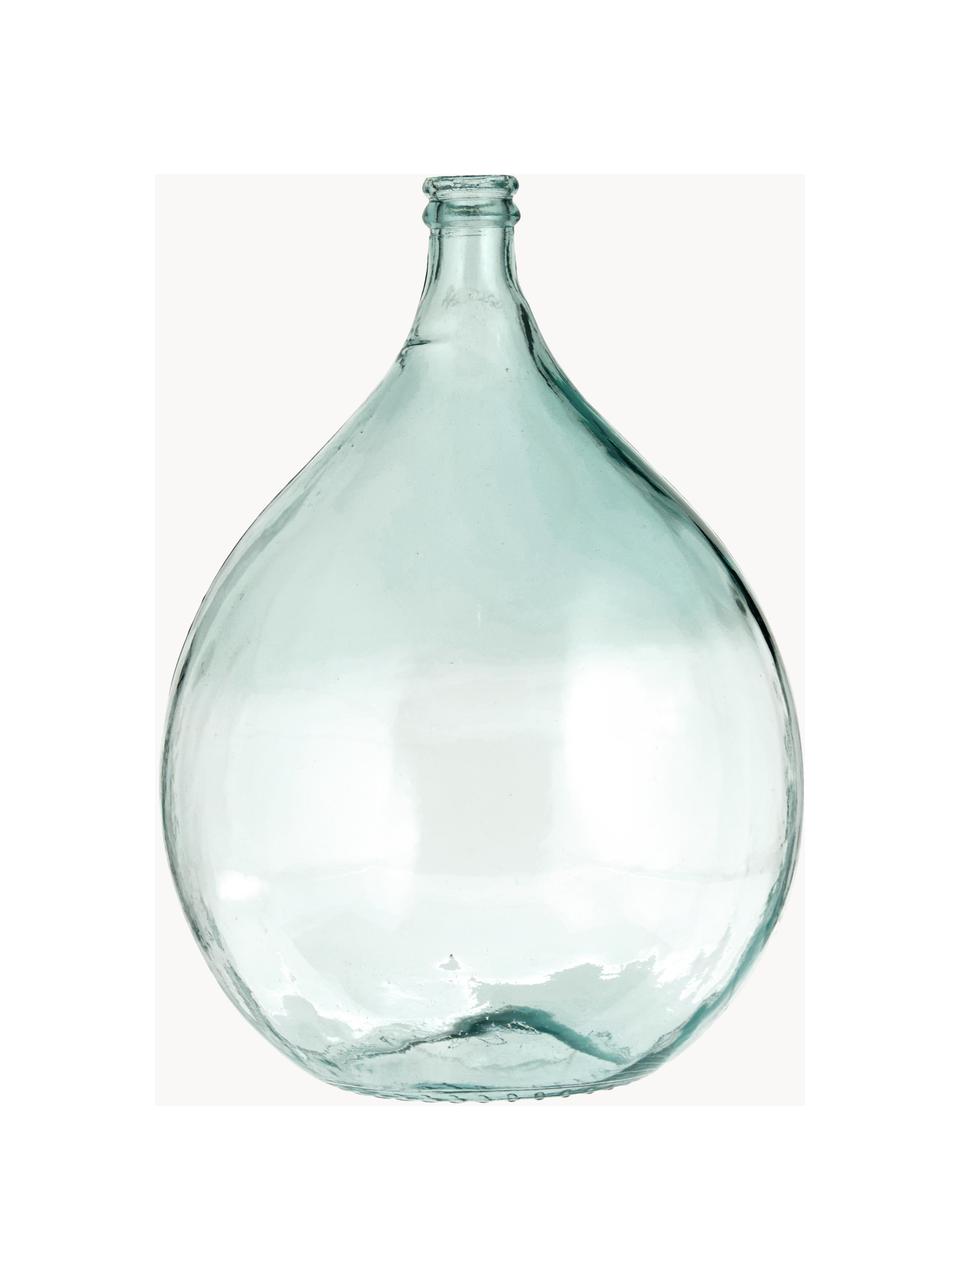 Vaso da terra in vetro riciclato Drop, alt. 56 cm